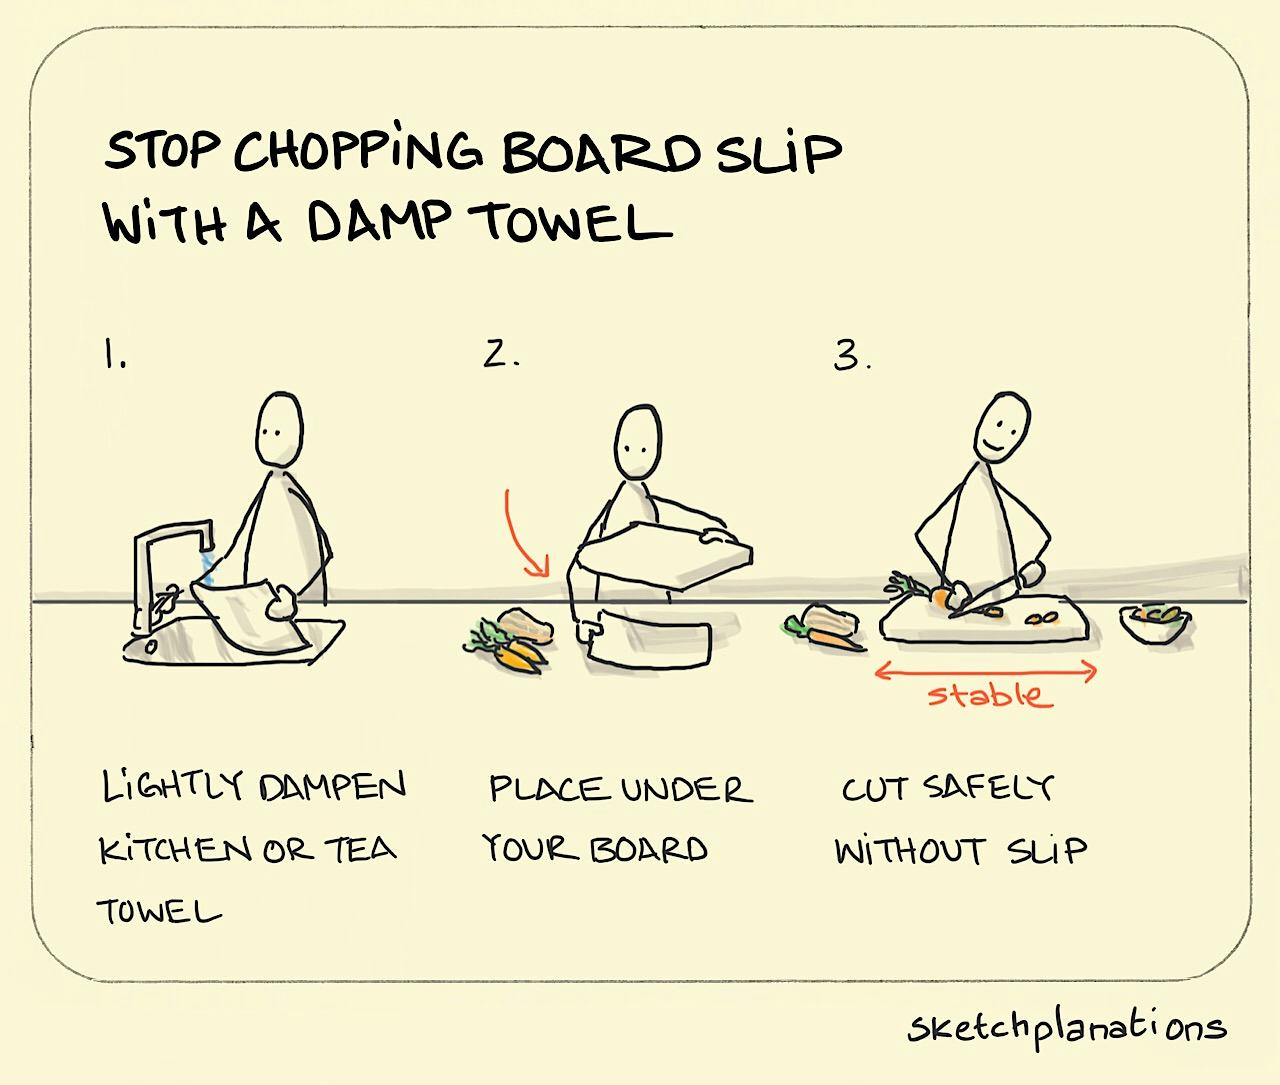 Stop chopping board slip - Sketchplanations